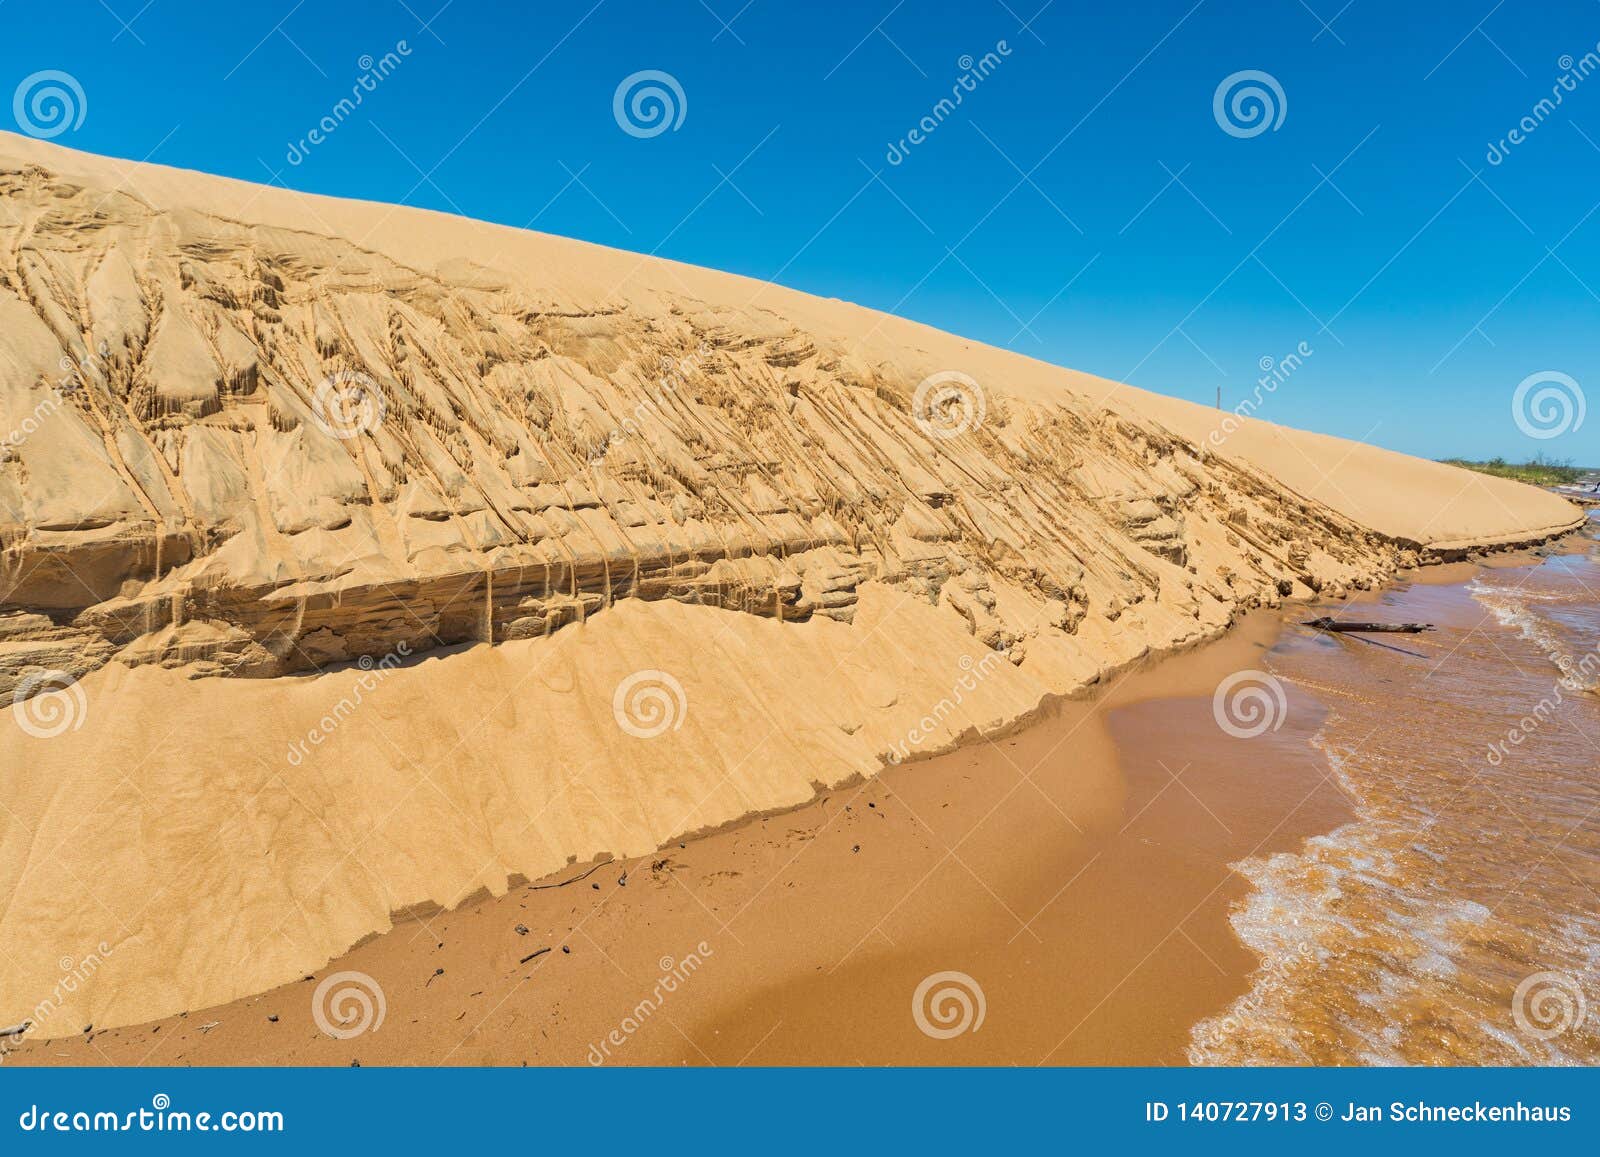 dunes island `las dunas de san cosme y damian` in the middle of the rio parana near the city encarnacion.